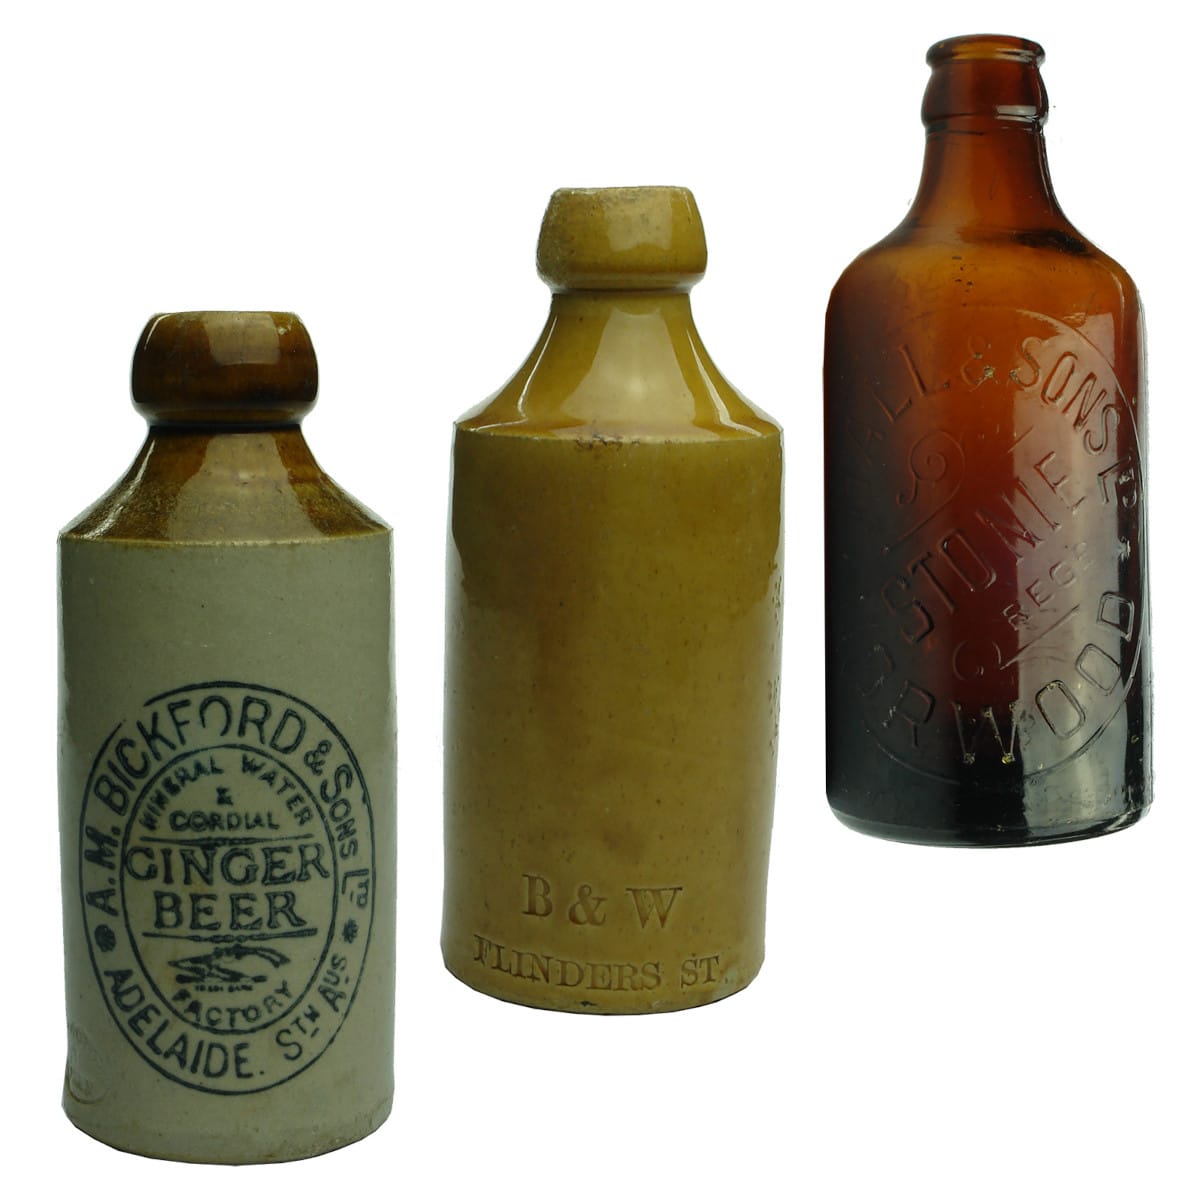 3 Ginger Beers: A. M. Bickford & Sons Ltd Adelaide; B & W, Flinders St; Hall & Sons Ltd Norwood. (South Australia)